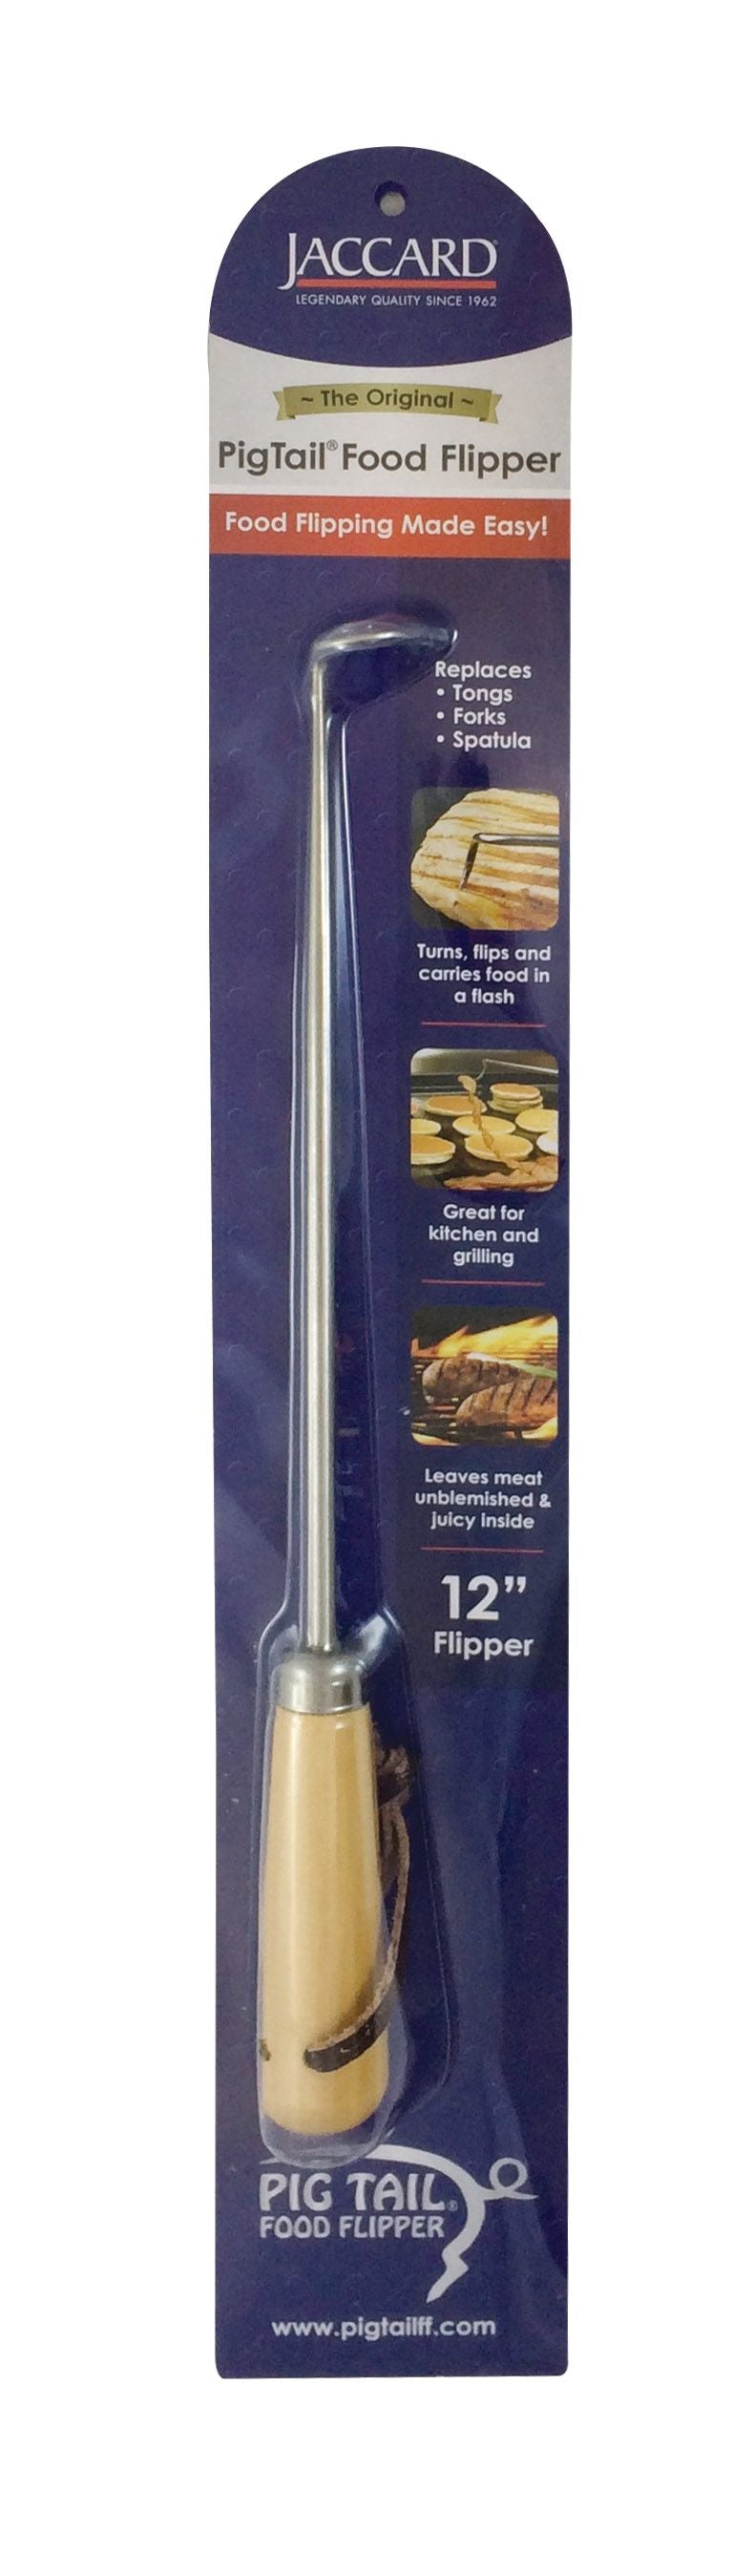 Pig Tail Food Flipper Kit - 16in. Long Shaft